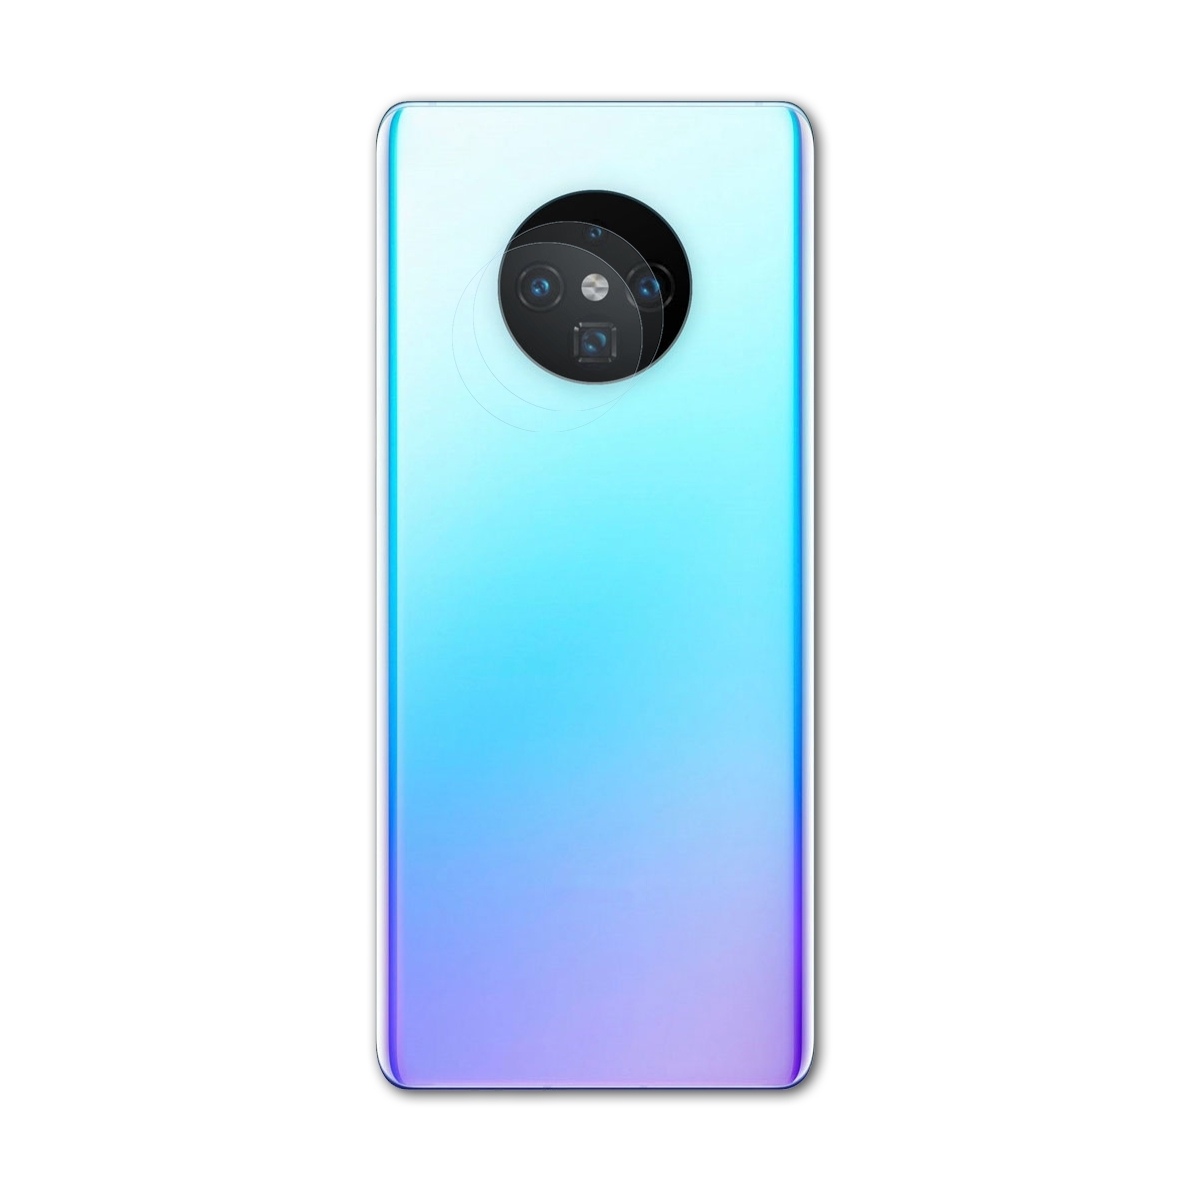 BRUNI 2x Basics-Clear Schutzfolie(für Huawei (Lens)) Pro 30 Mate